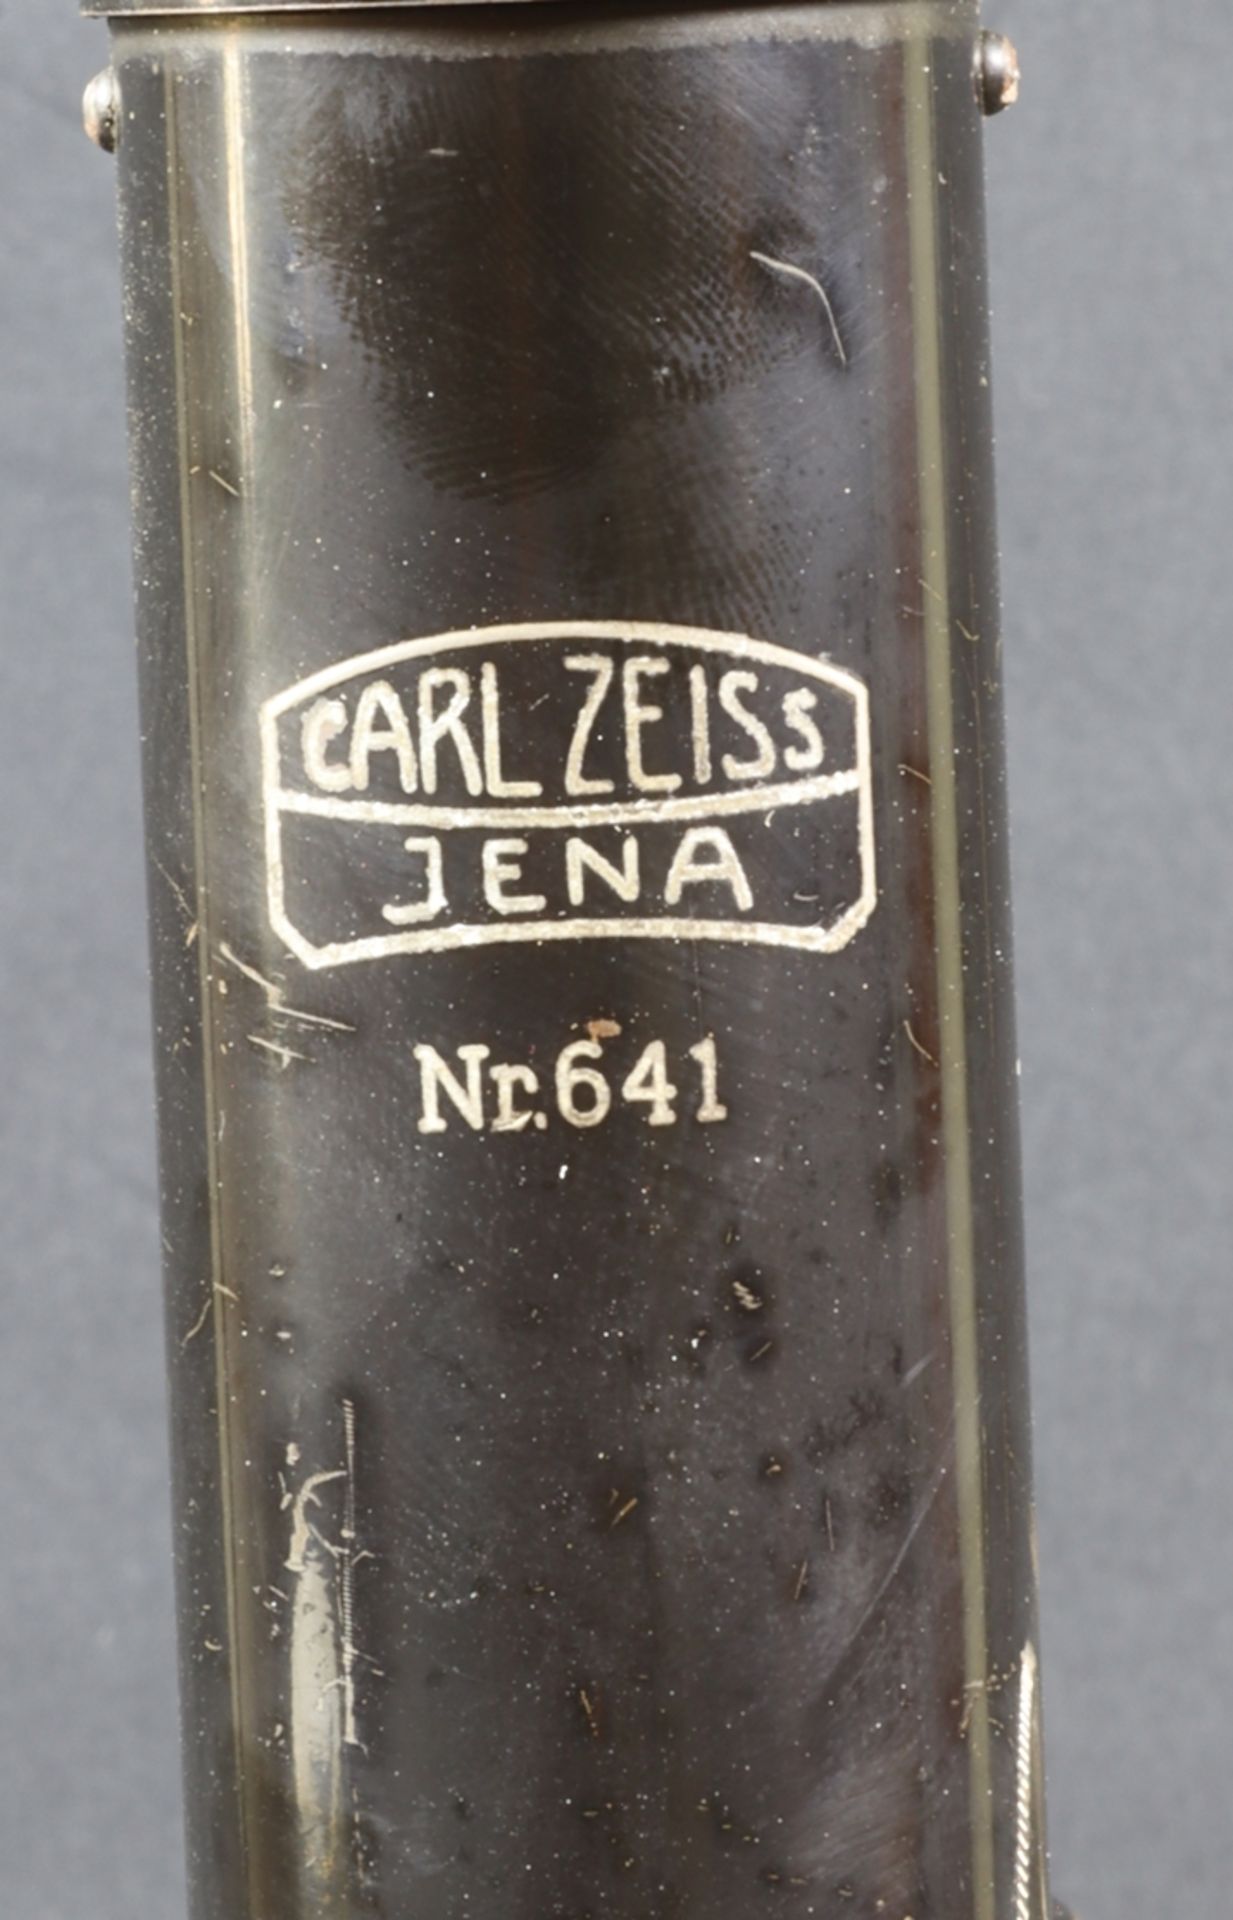 Technisches Vermessungsmikroskop/ No 641 - Carl Zeiss Jena, 30er Jahre des 20.Jh., Deutsch - Image 2 of 2